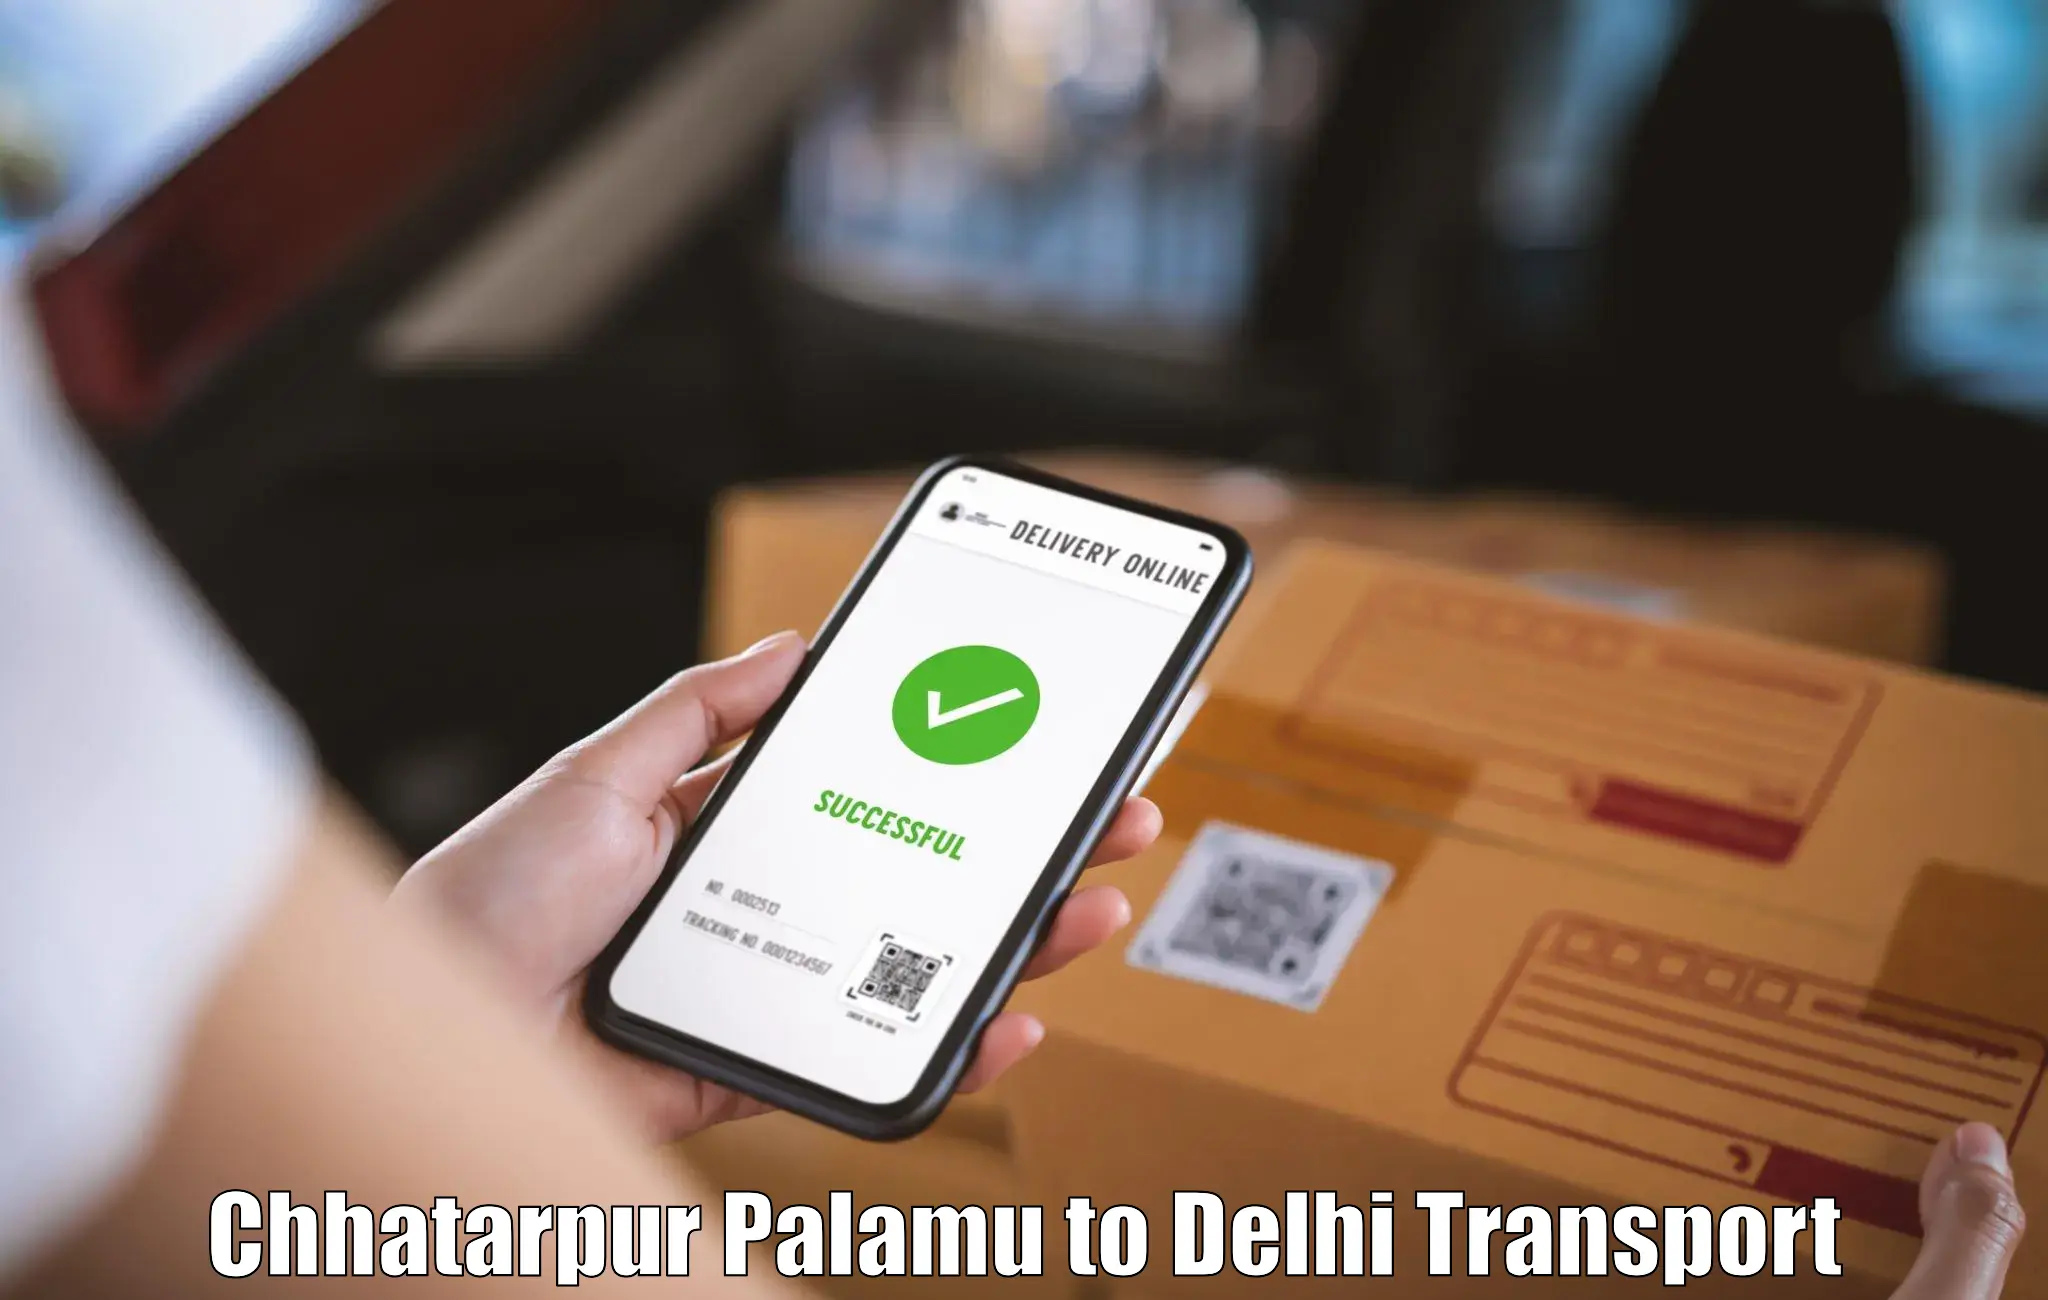 Goods delivery service Chhatarpur Palamu to Sansad Marg